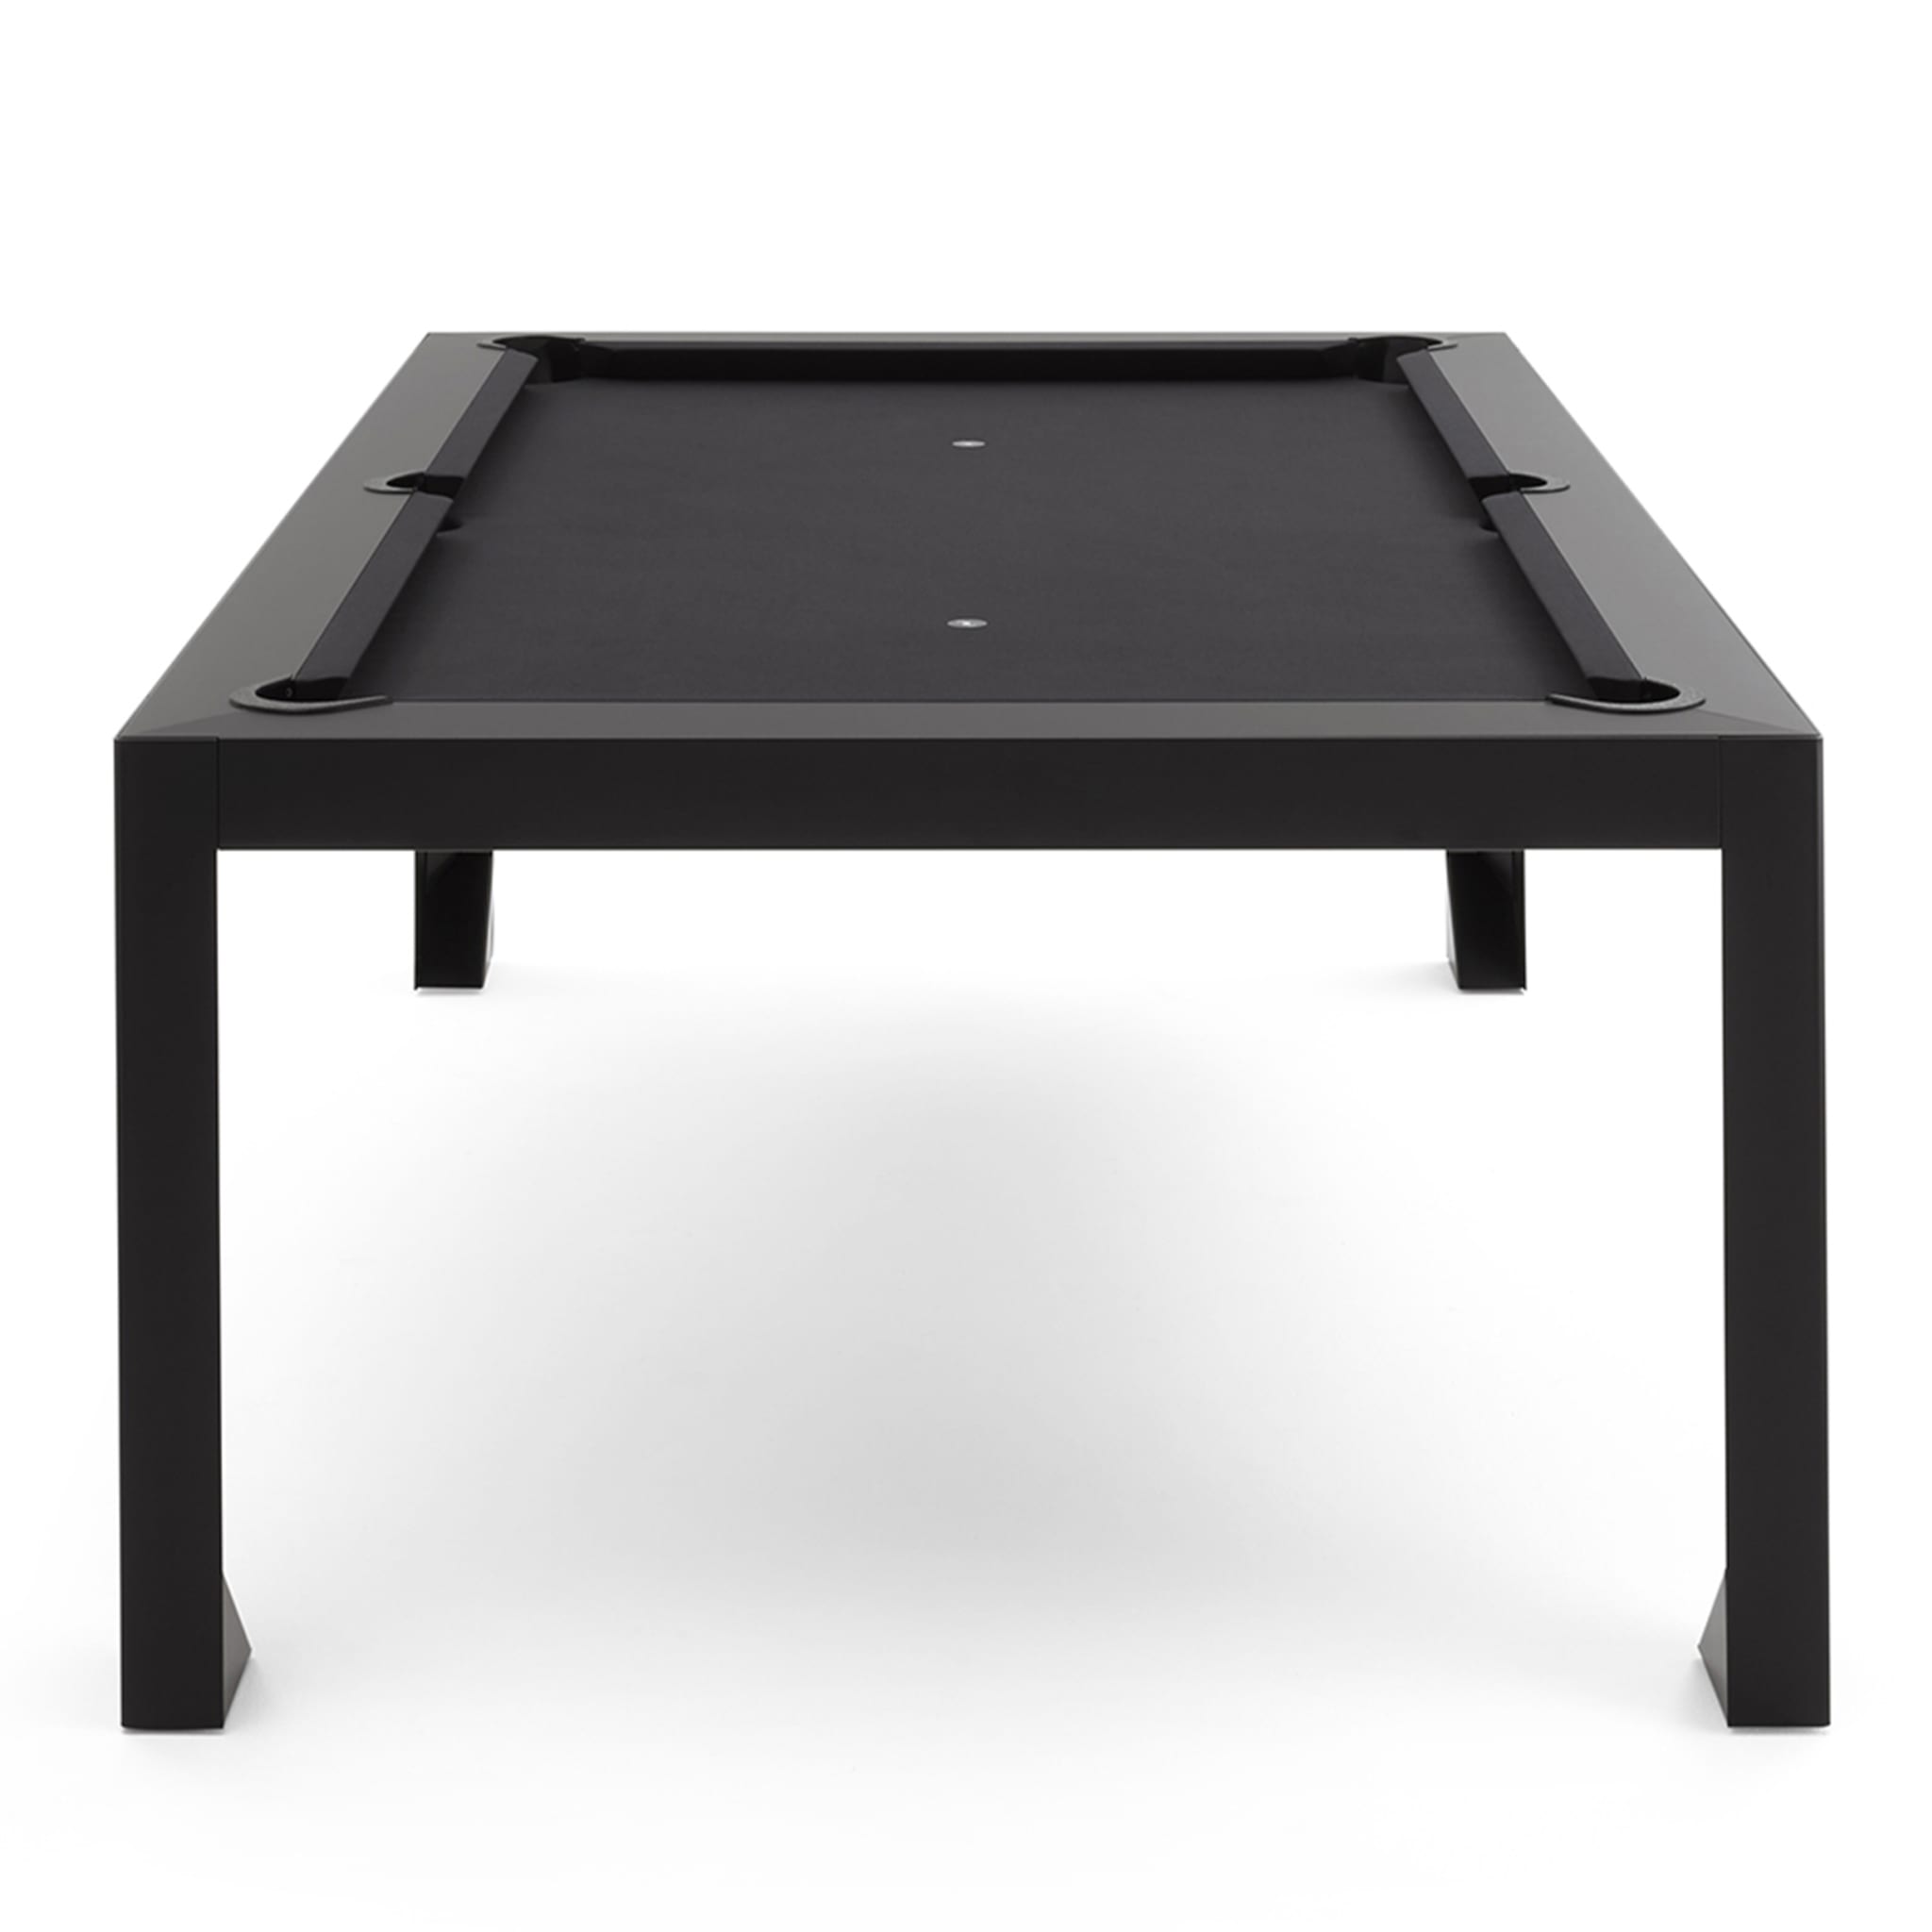 Carambola Cubista 7' Black Pool Table by Basaglia + Rota Nodari - Alternative view 2